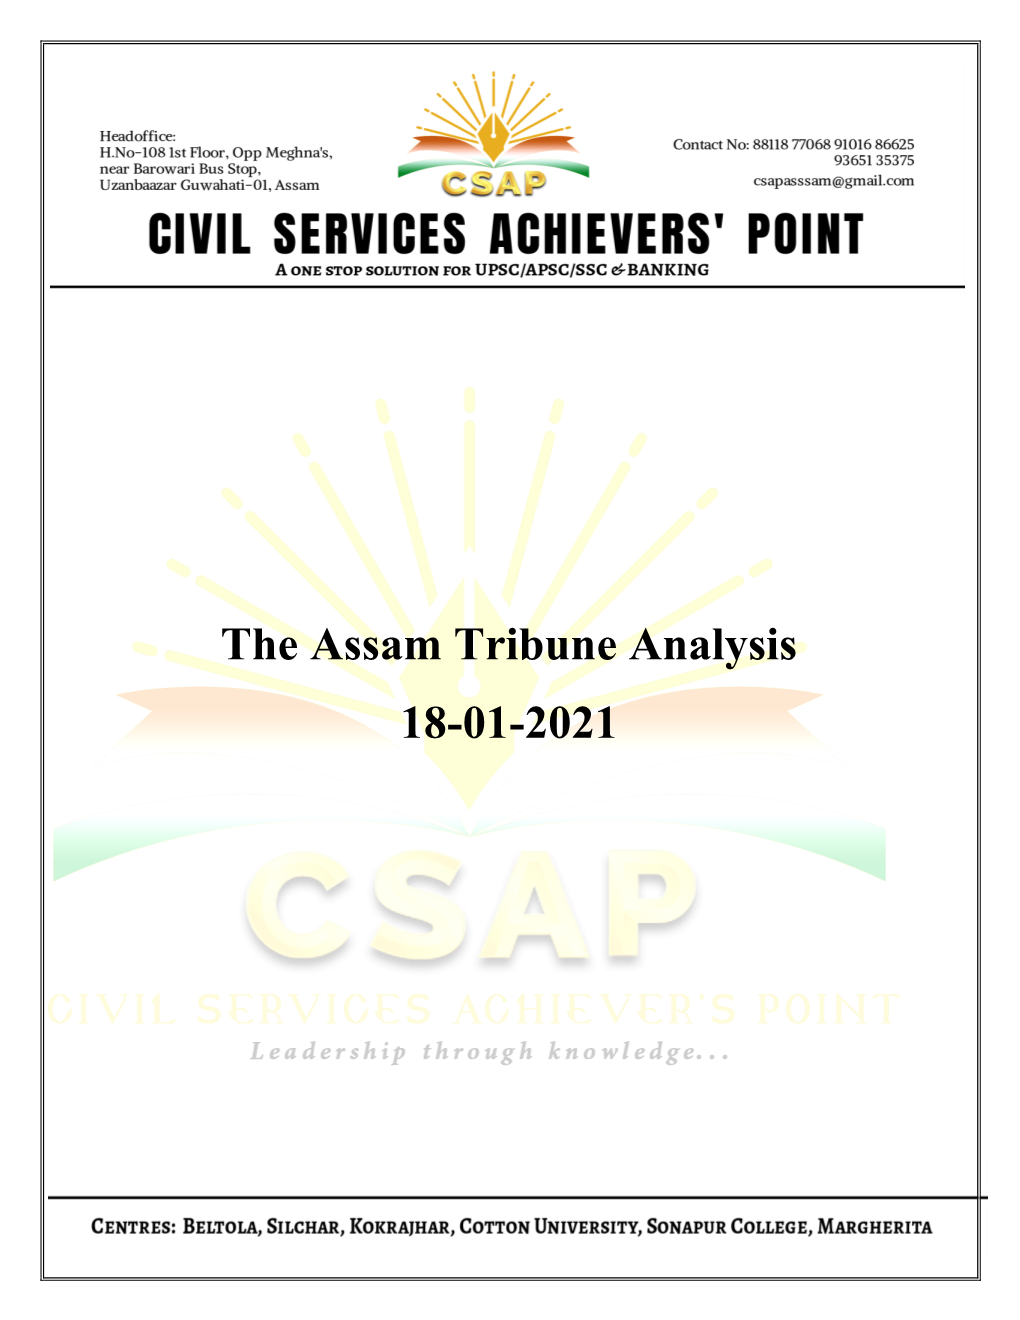 The Assam Tribune Analysis 18-01-2021